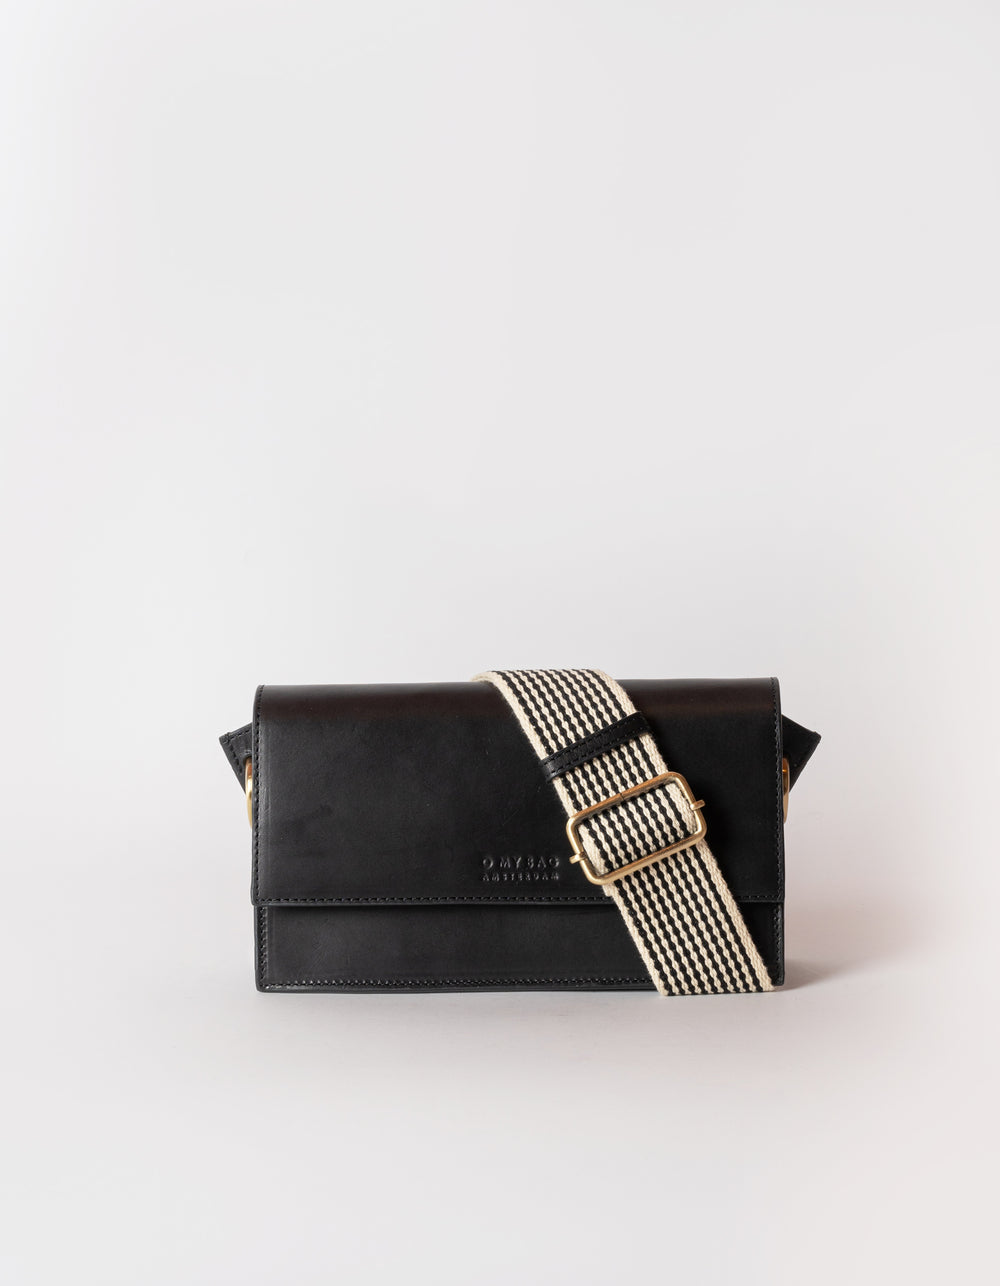 STELLA Black Classic Leather Bag